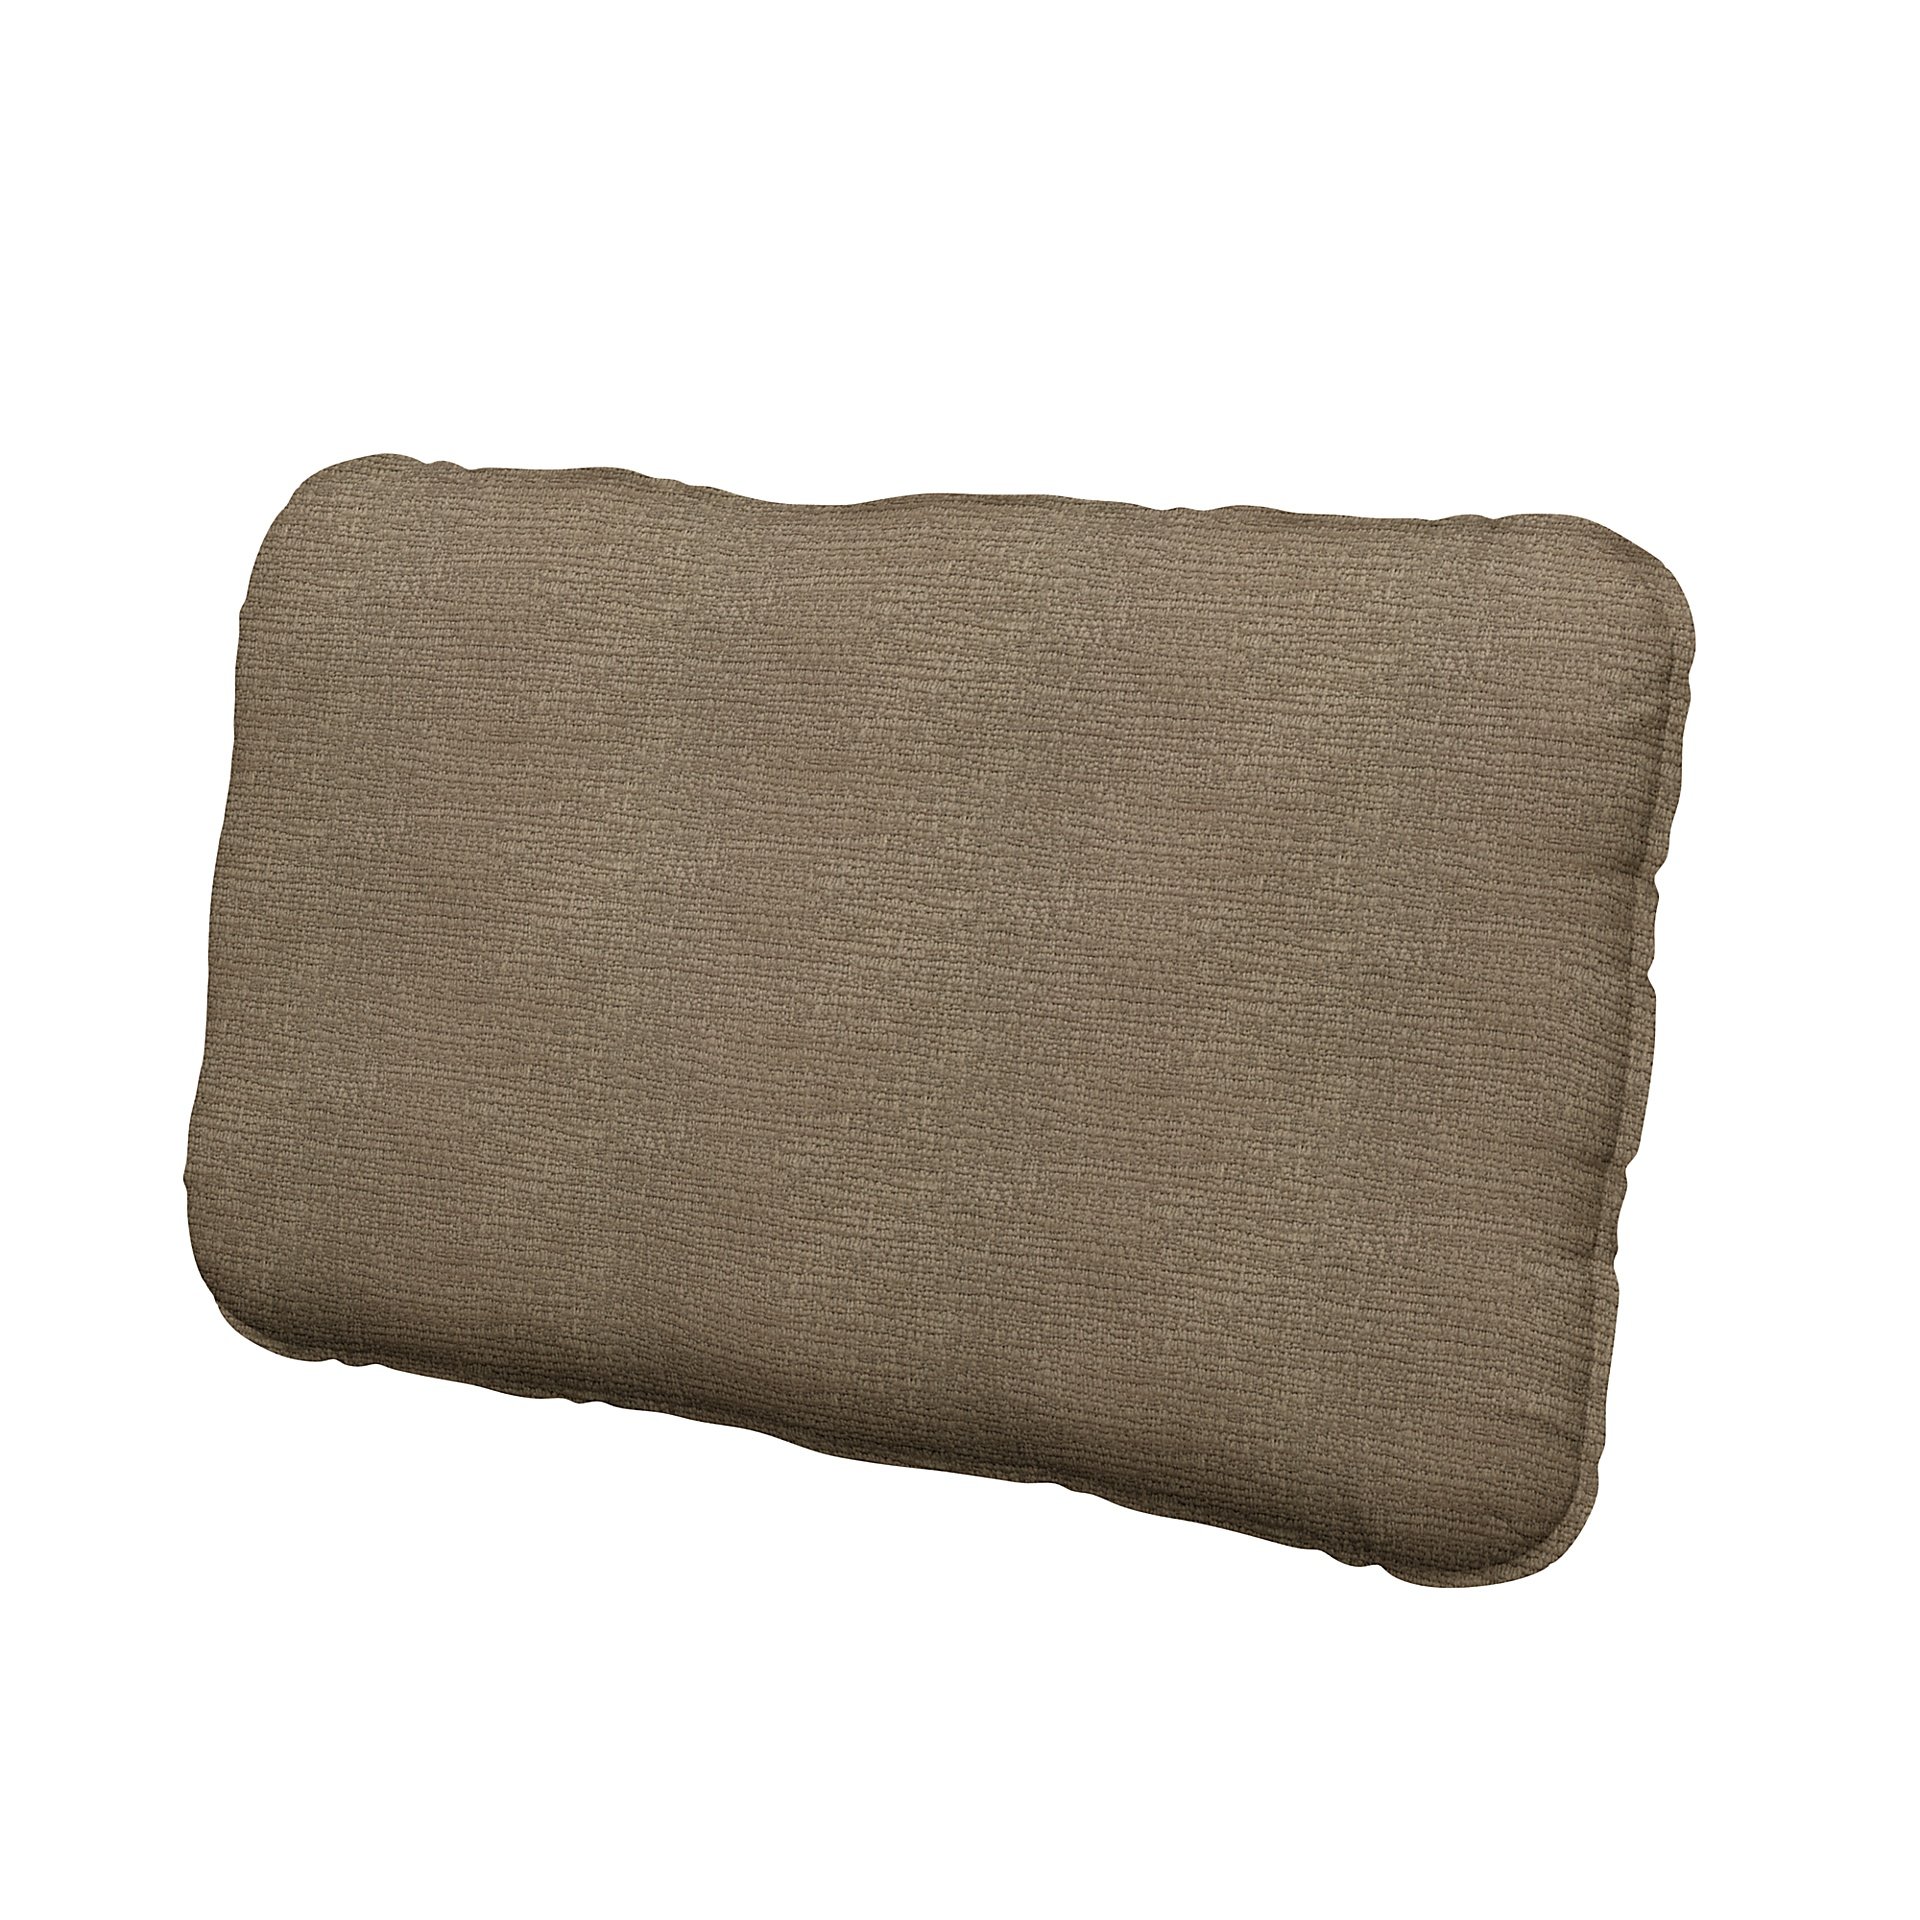 IKEA - Vallentuna back cushion cover 40x75cm, Camel, Boucle & Texture - Bemz